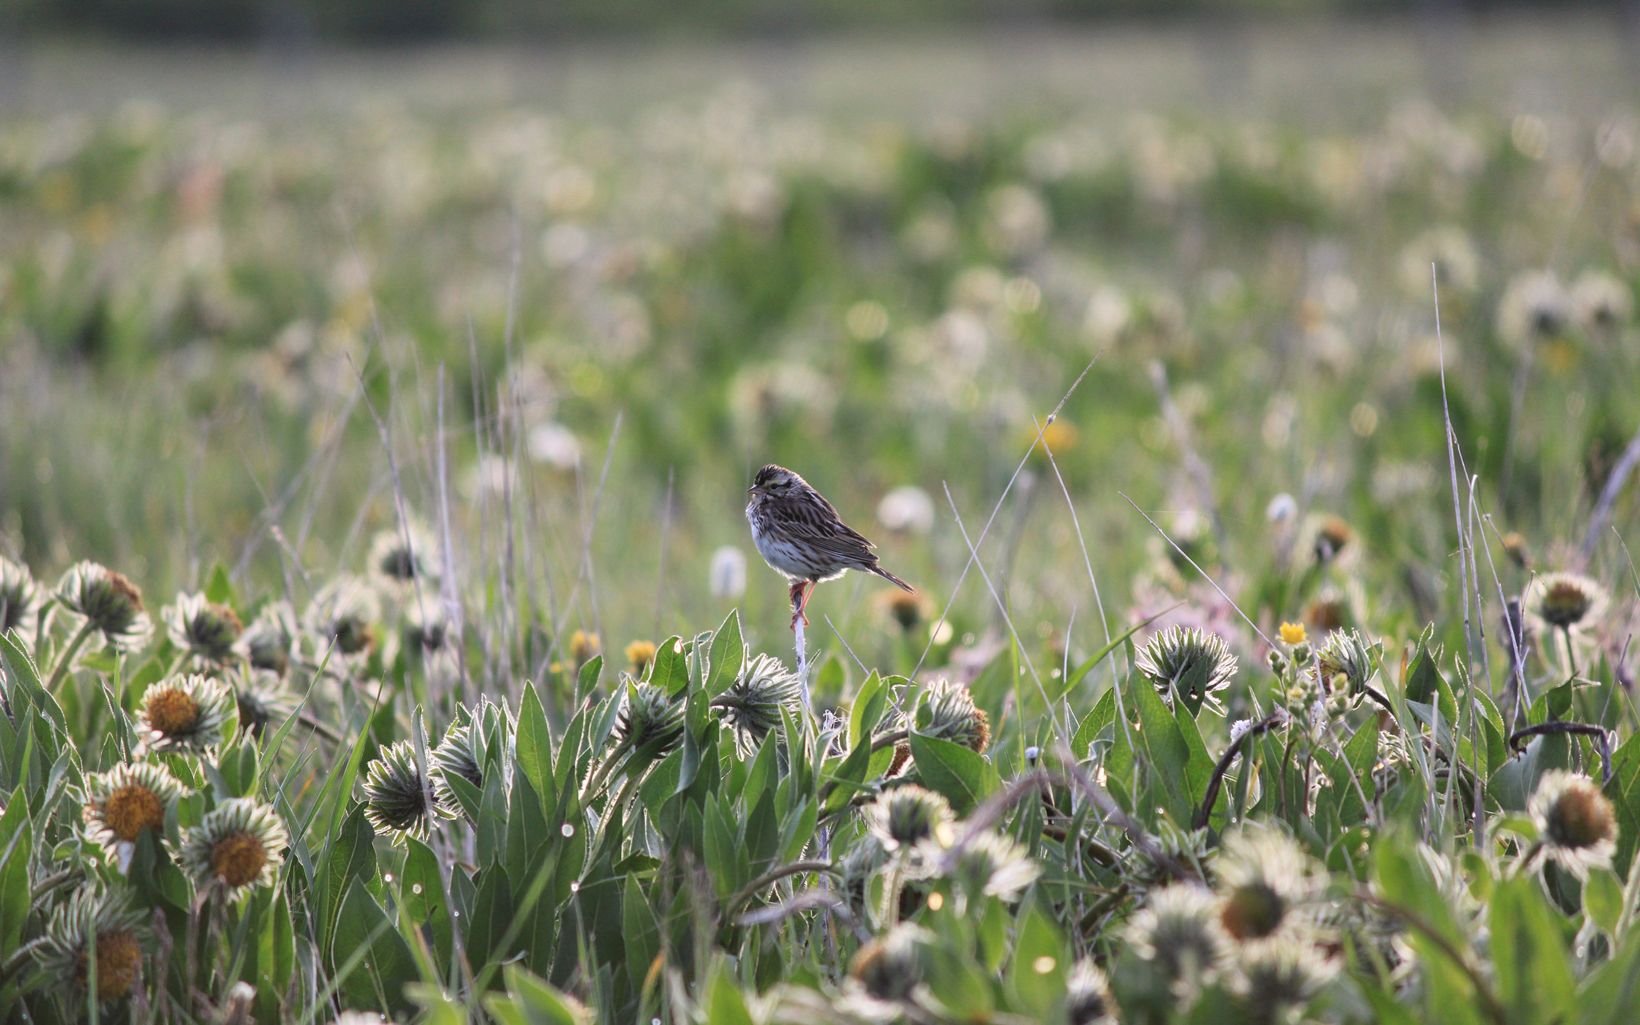 
                
                  Perched Sparrow  
                  © The Nature Conservancy (Megan Grover-Cereda)
                
              